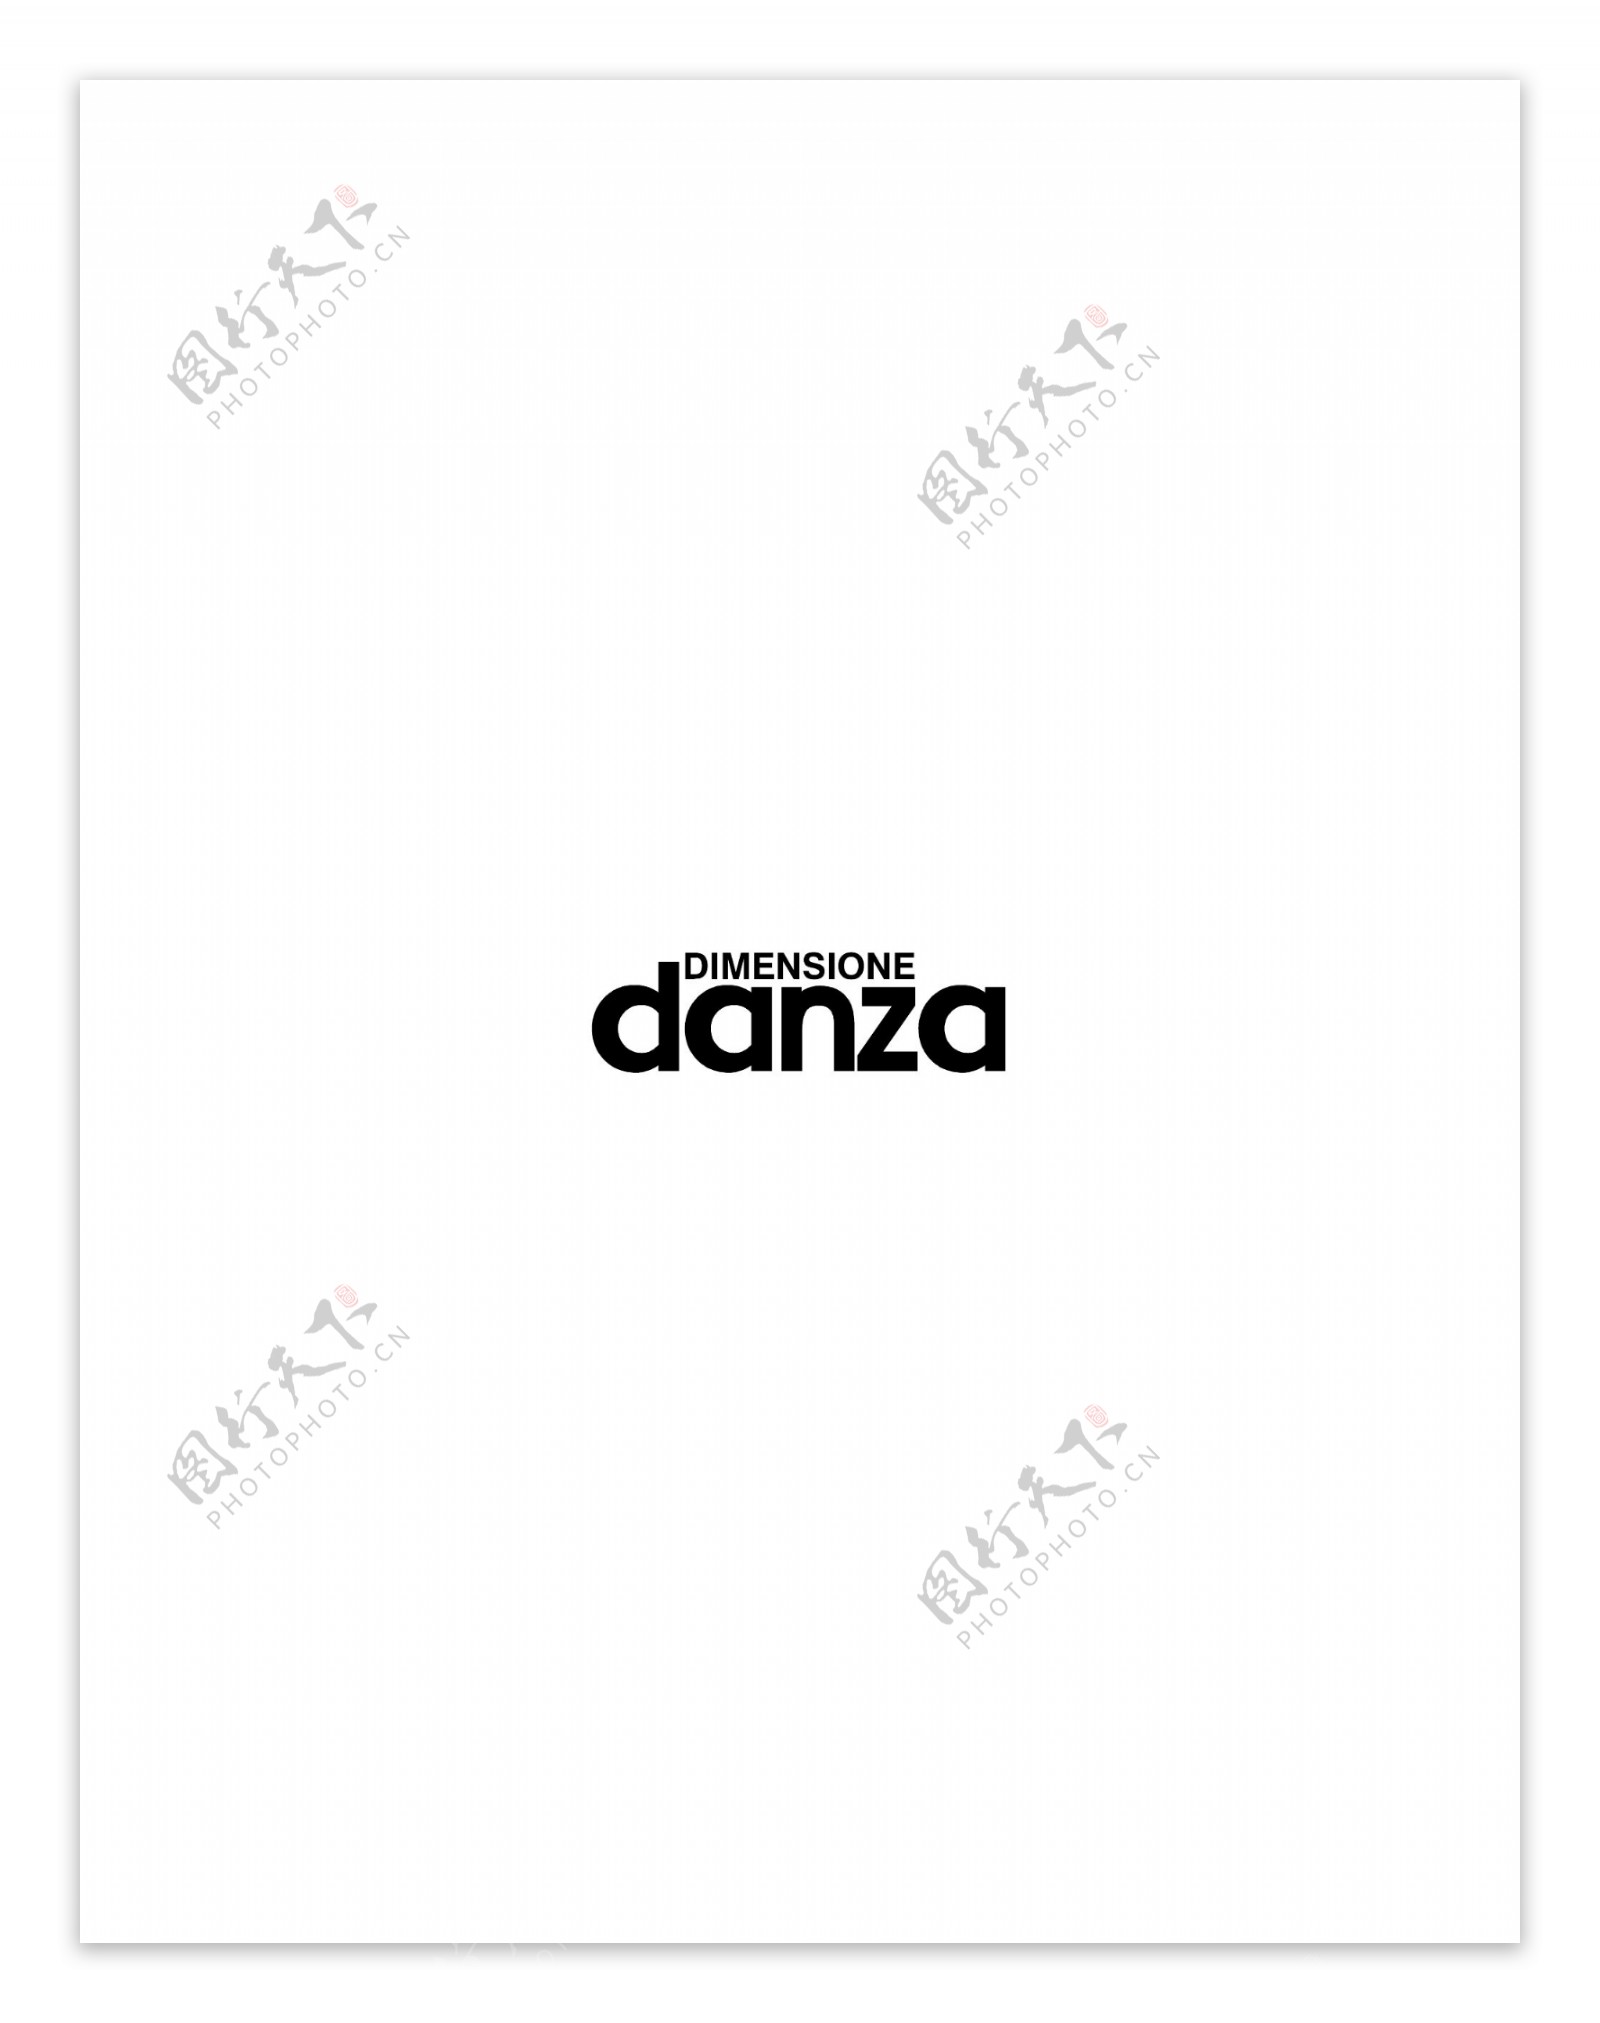 DimensioneDanzalogo设计欣赏DimensioneDanza服饰品牌标志下载标志设计欣赏